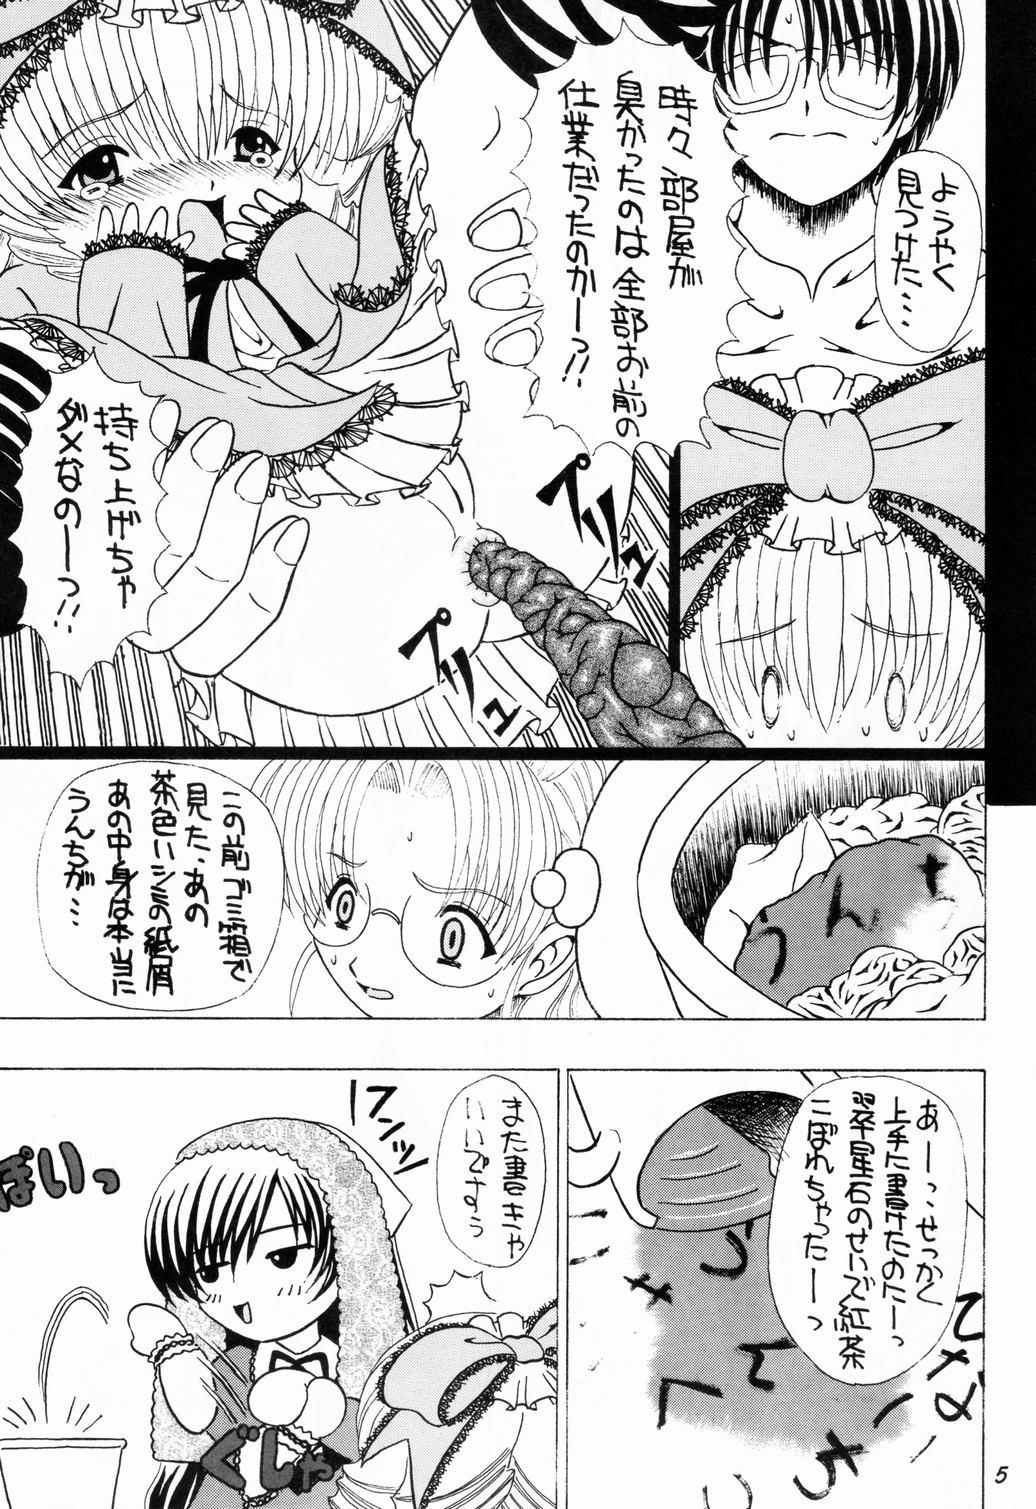 Big Dengeki Shiri Magazine 8 - Rozen maiden Dirty Talk - Page 4